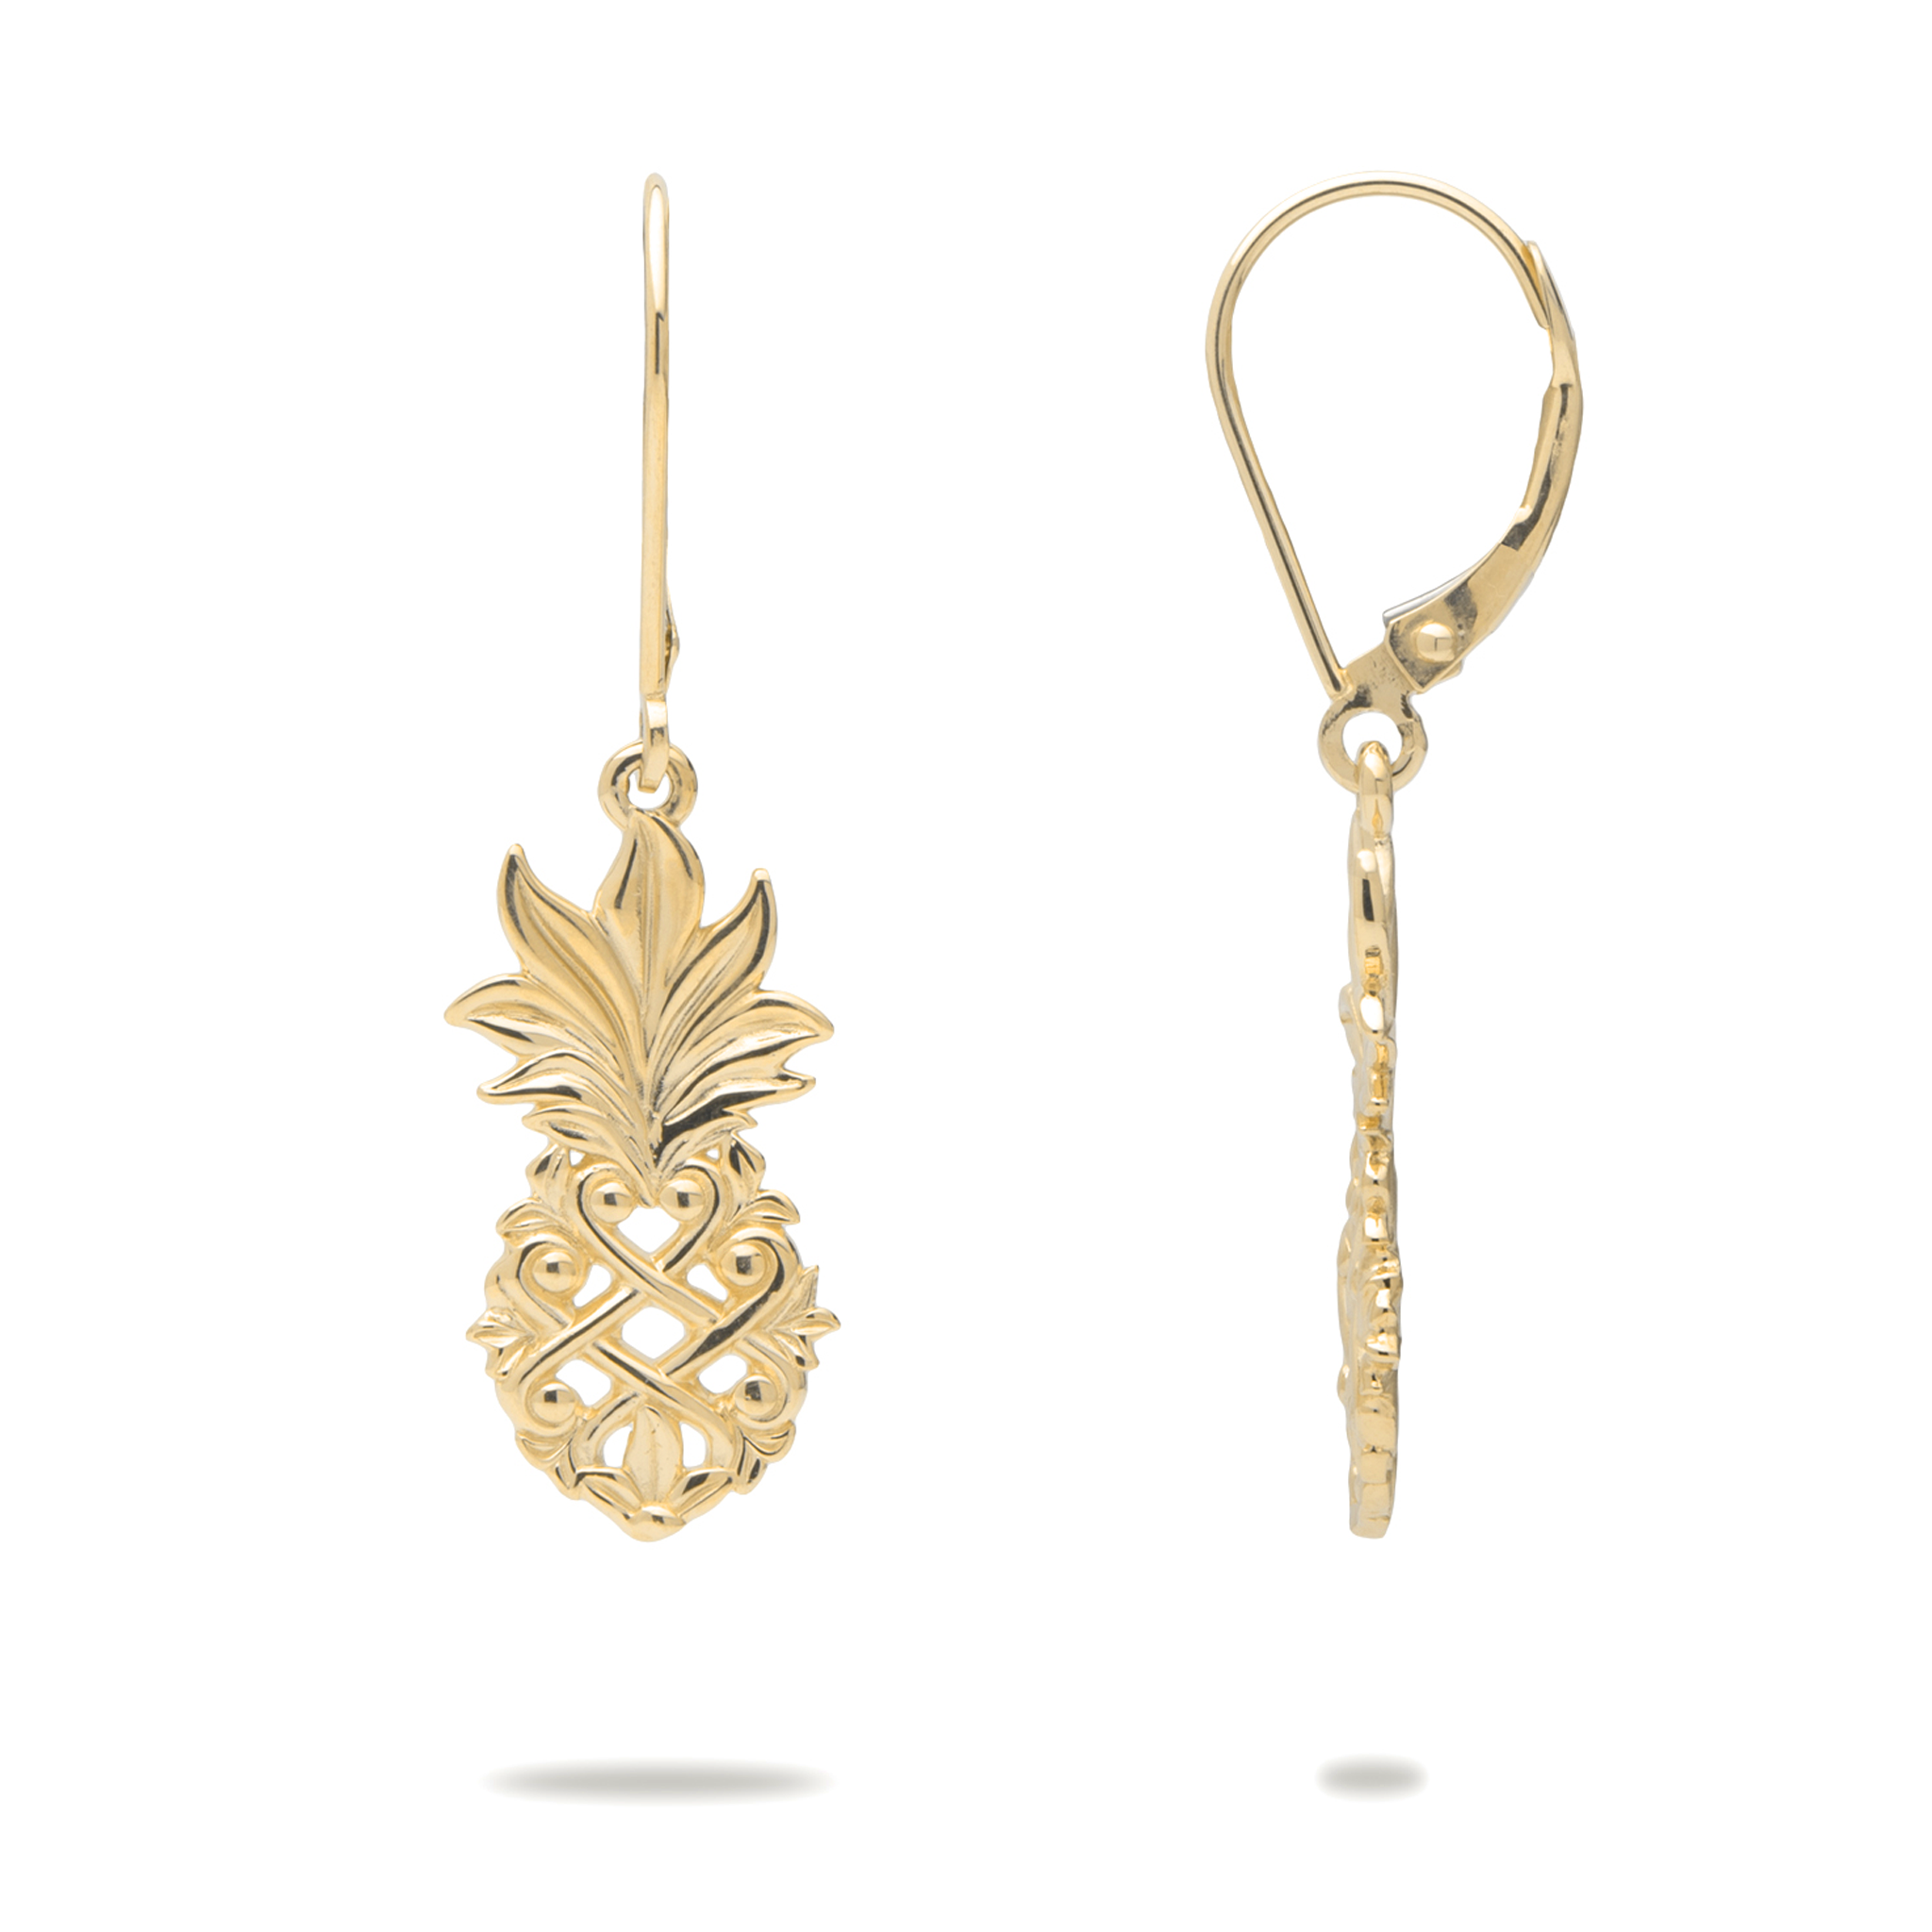 Living Heirloom Pineapple Earrings in Gold - 20mm